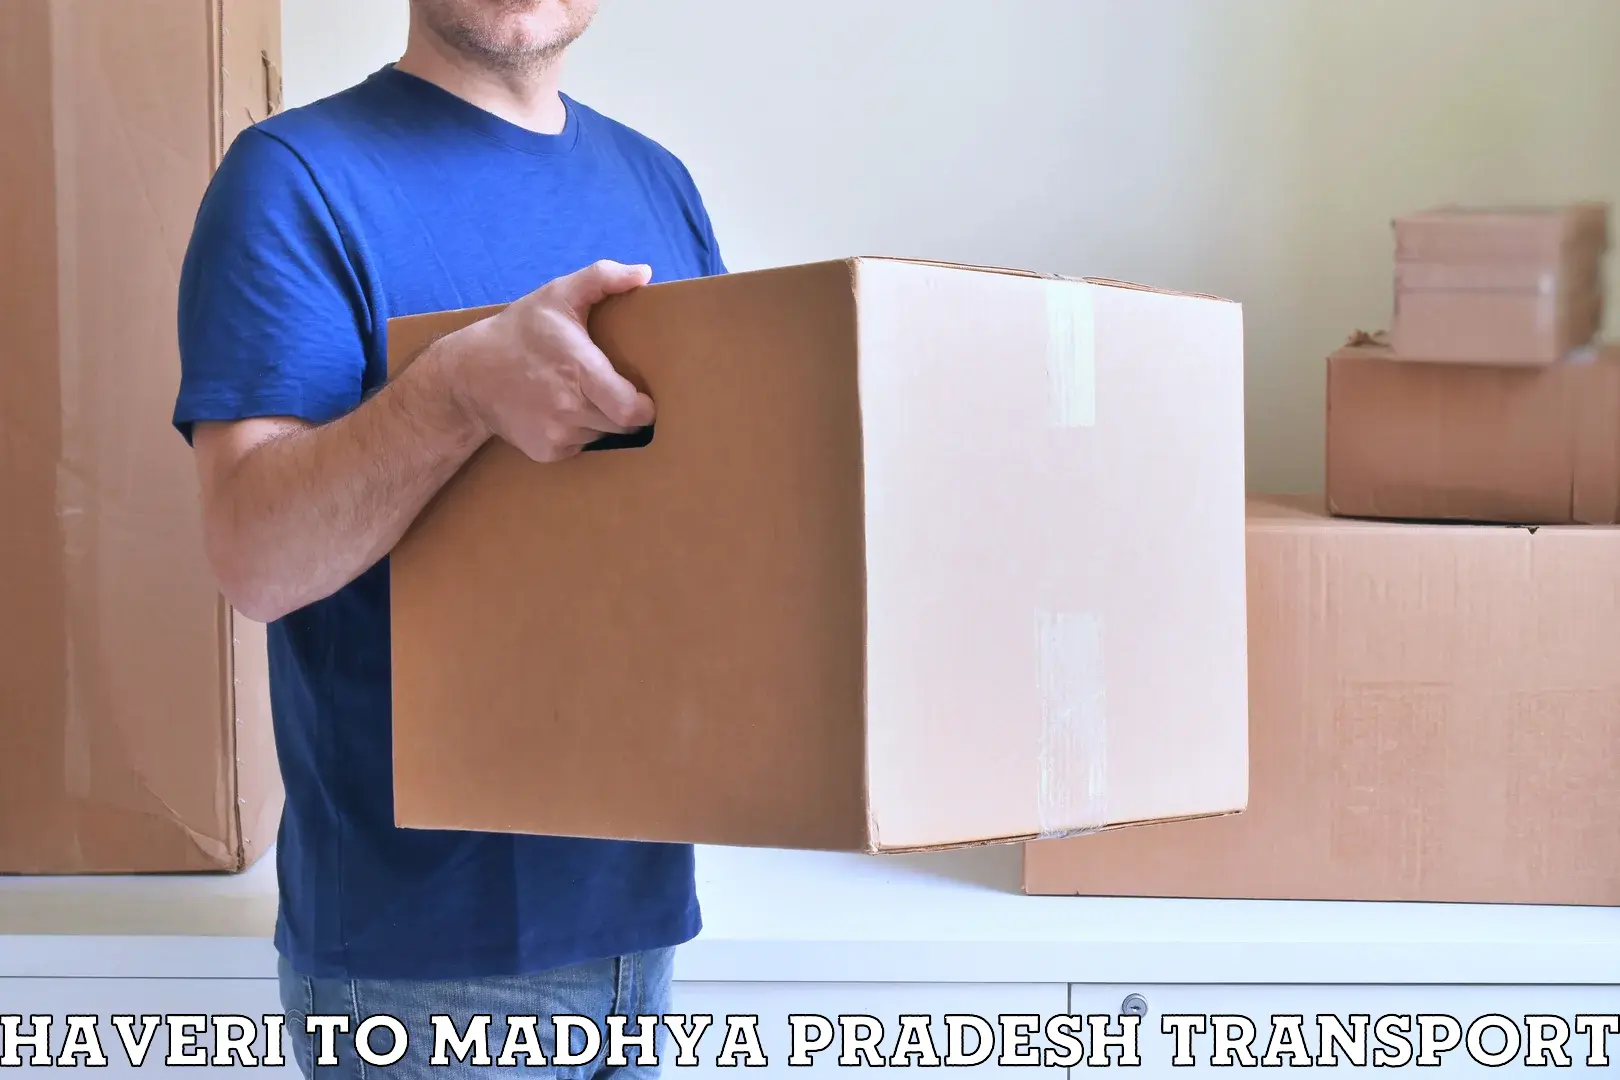 Container transport service Haveri to Maheshwar